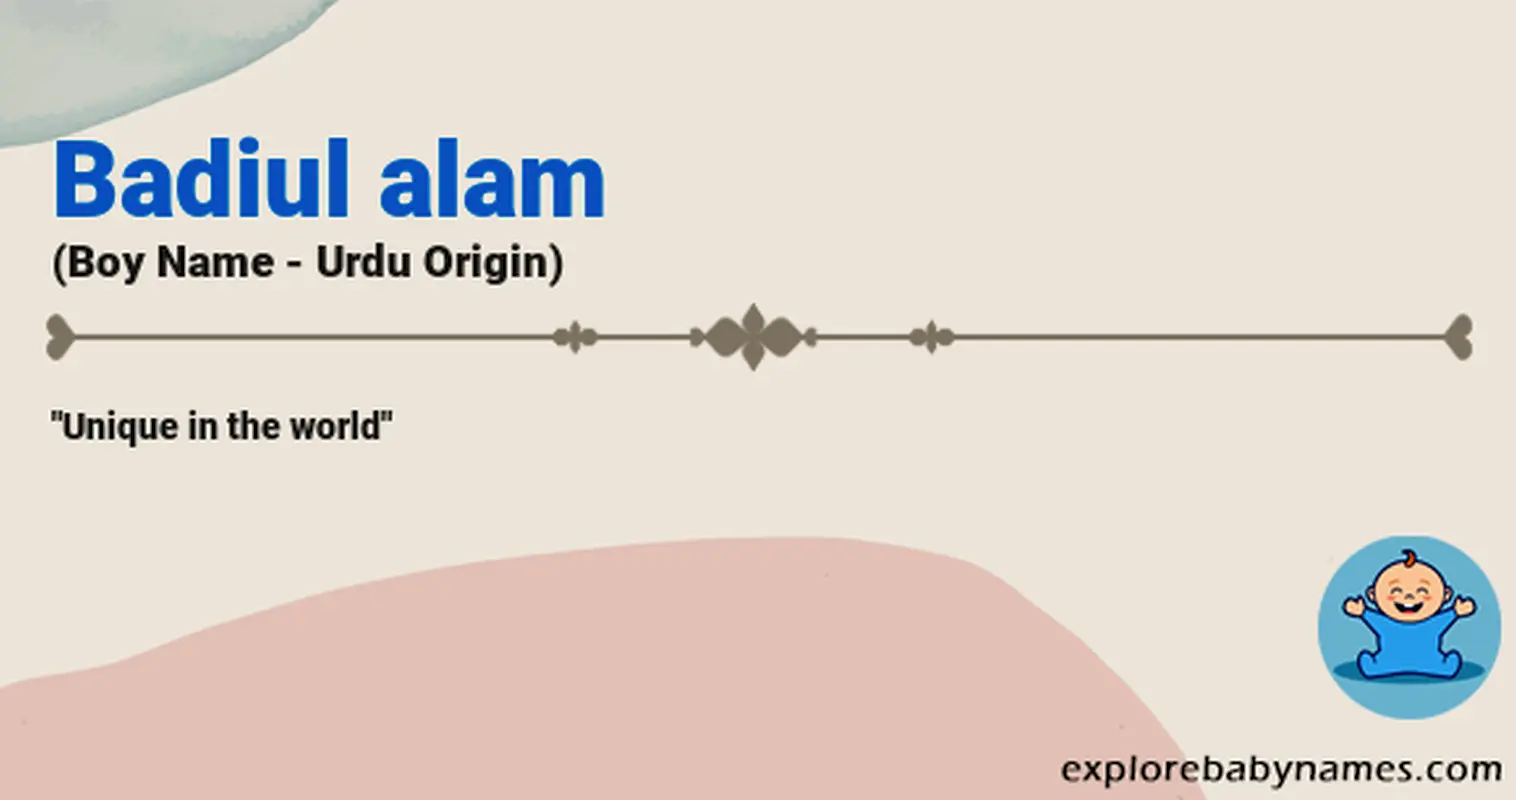 Meaning of Badiul alam